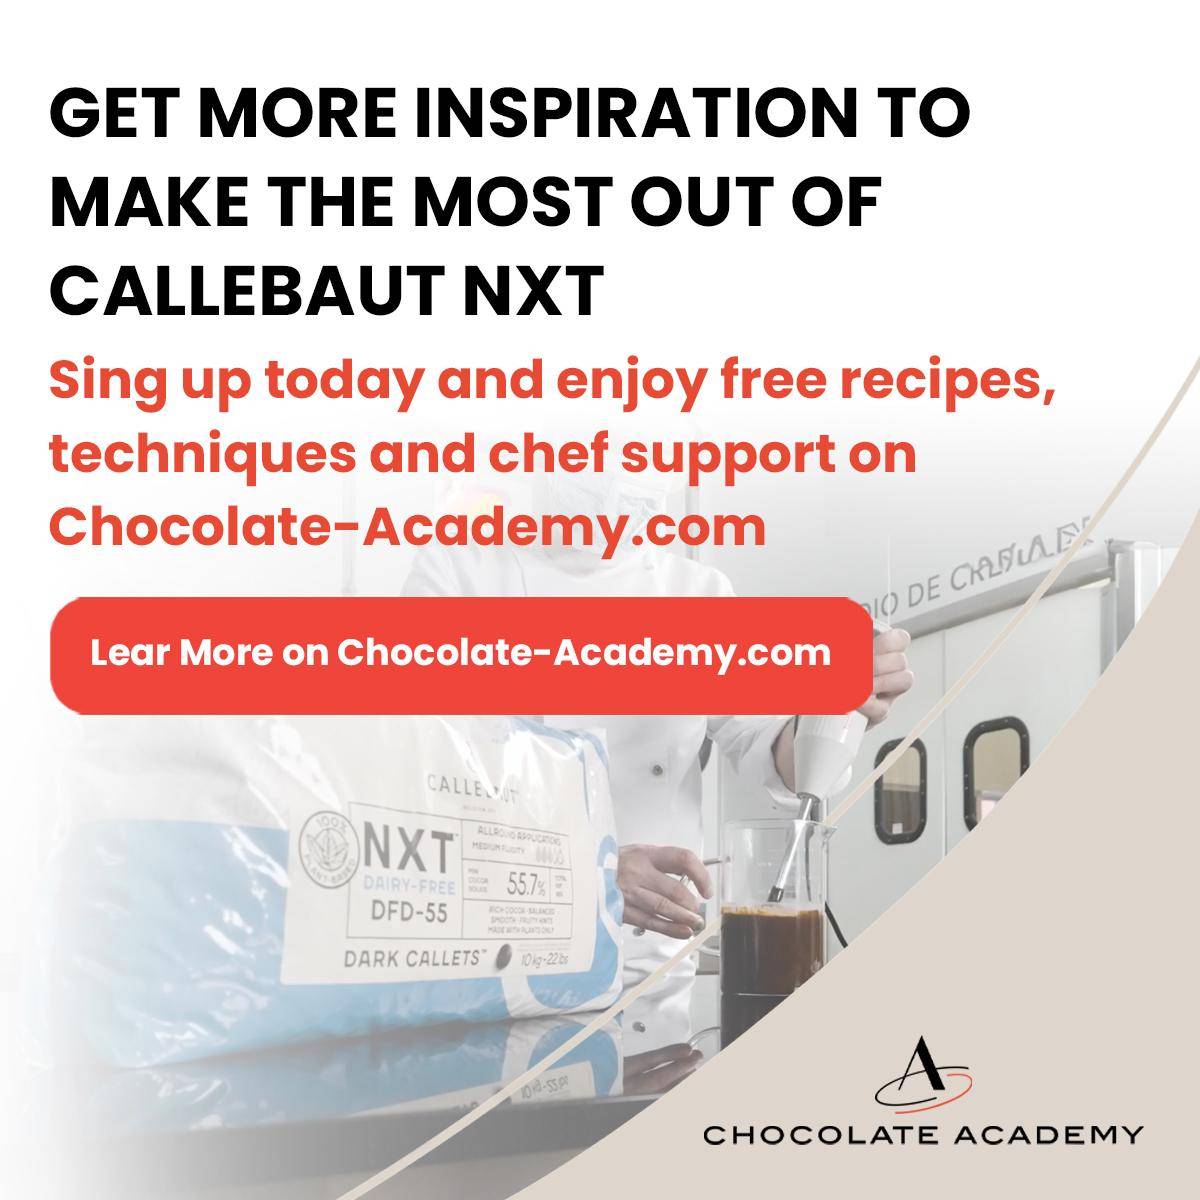 Visit me to chocolate-academy.com